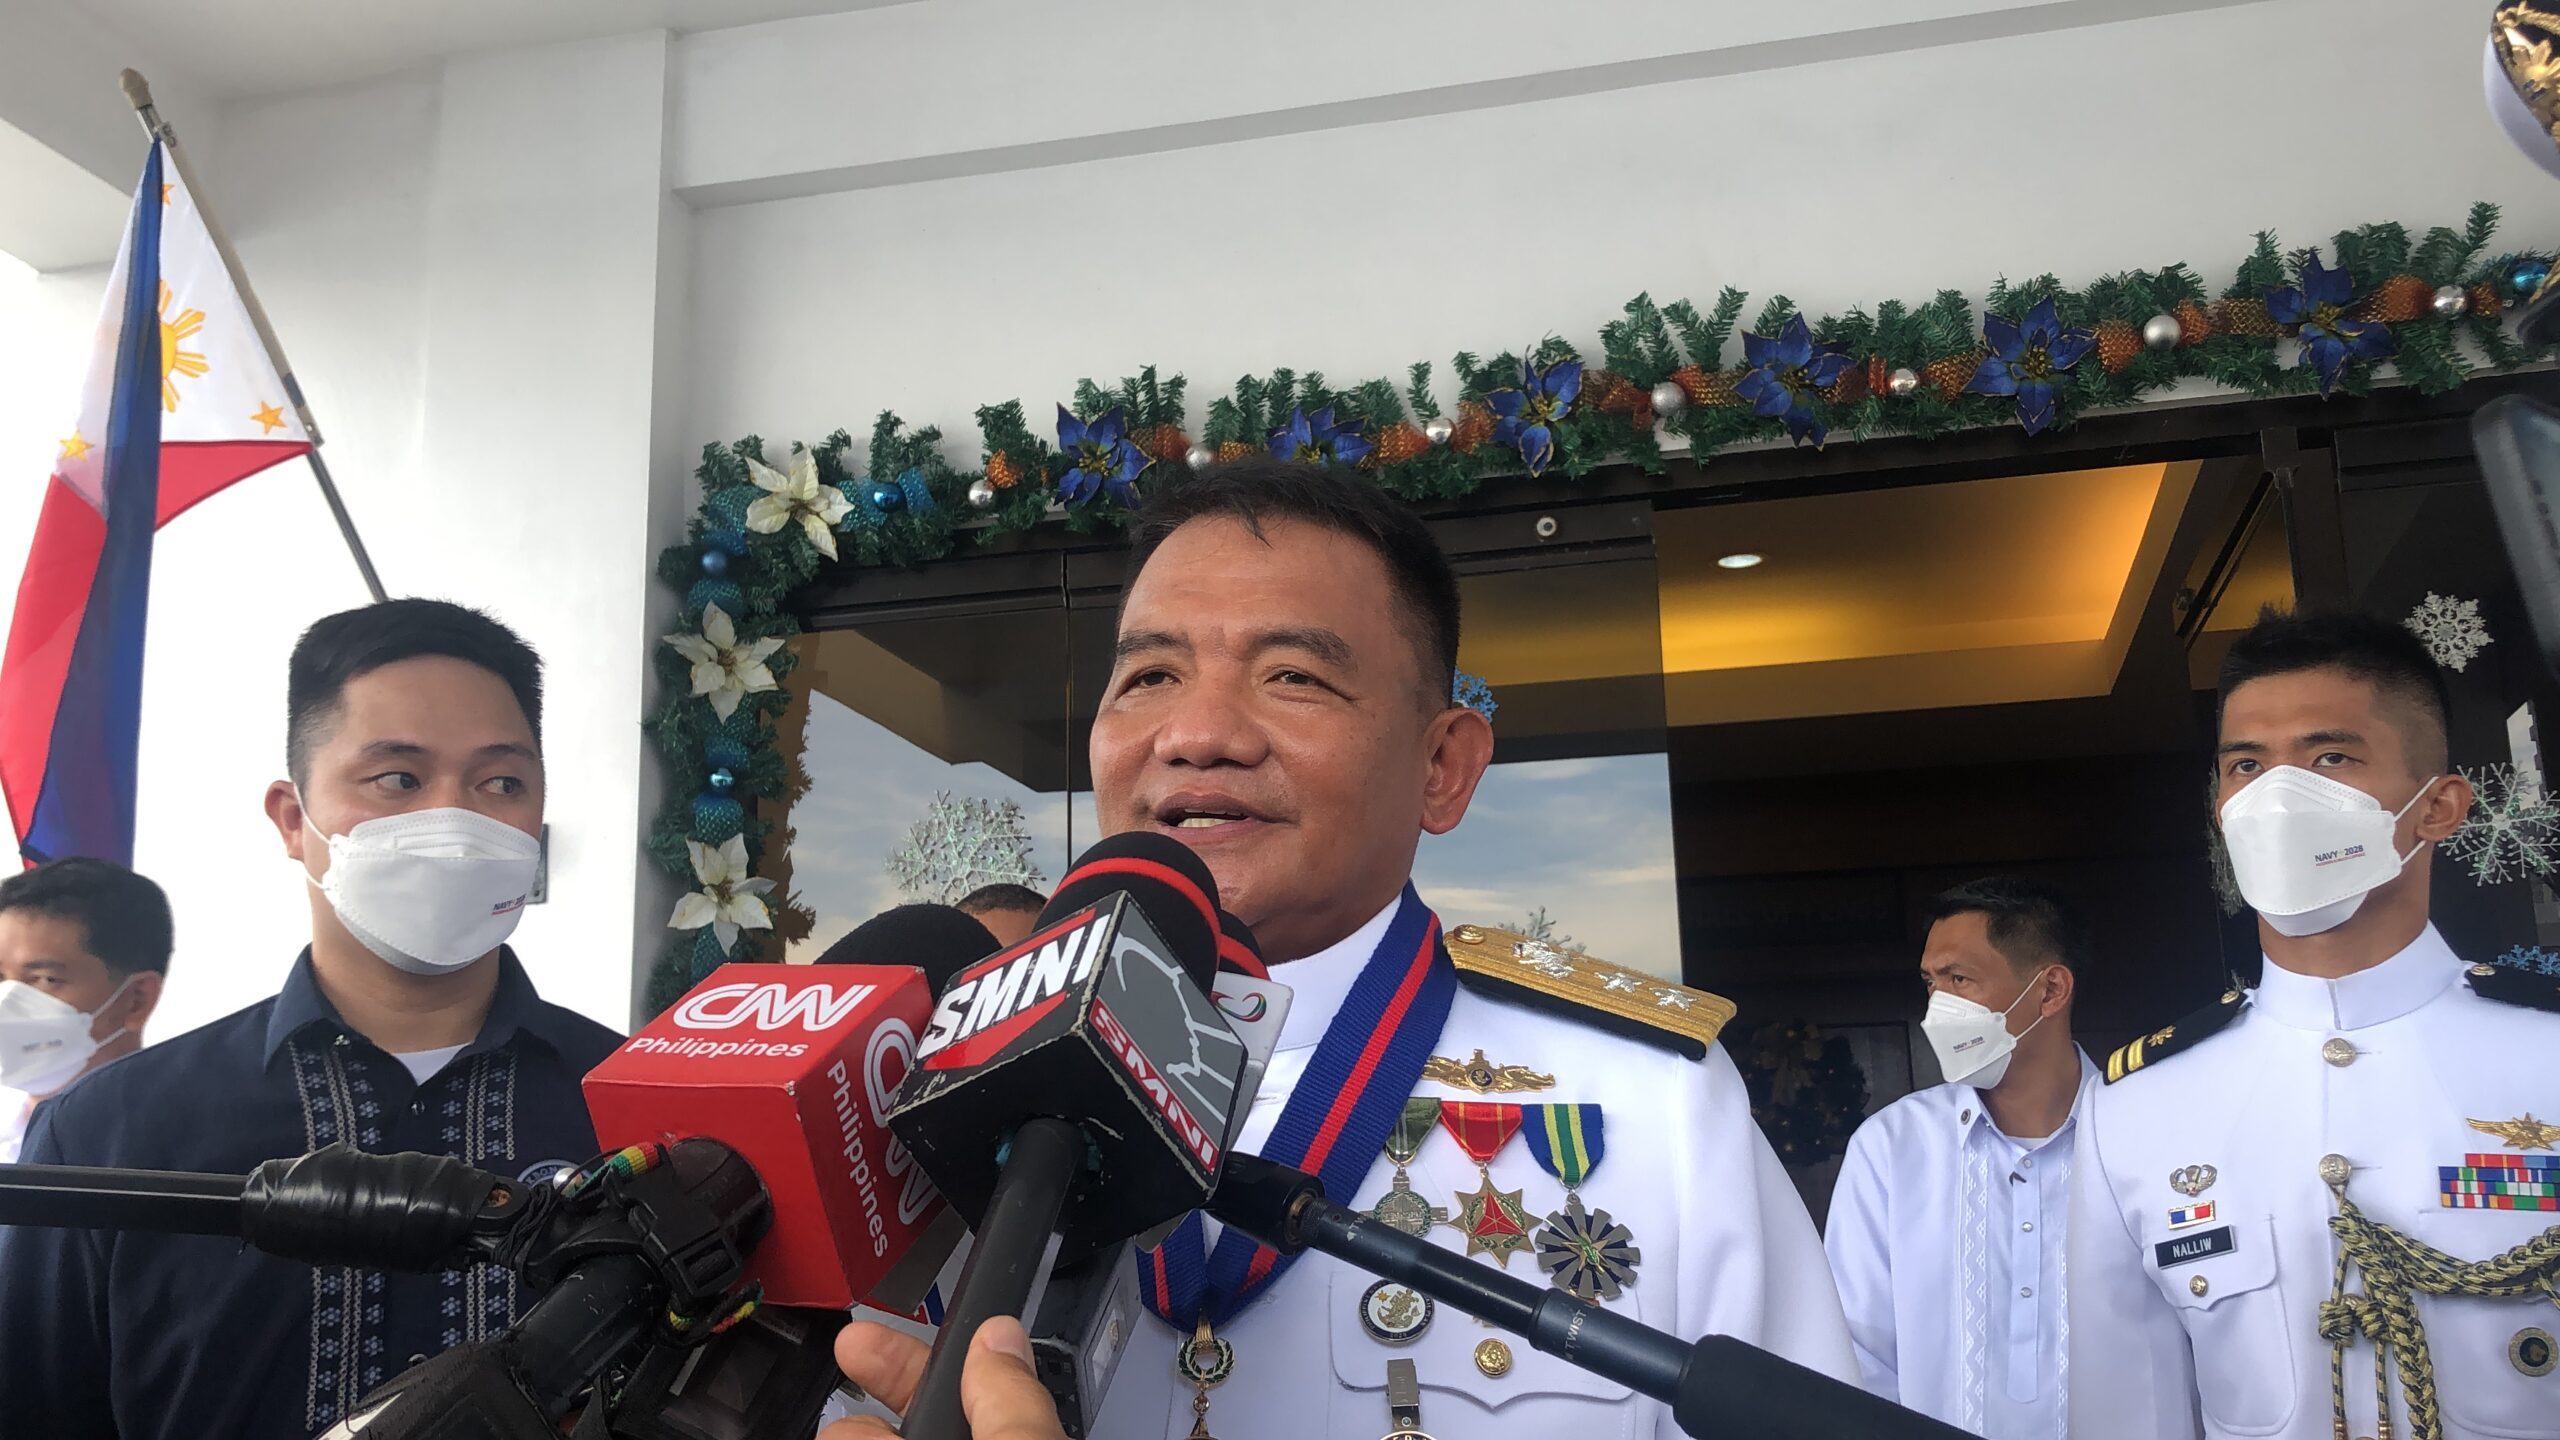 Toribio Adaci Jr. is new Philippine Navy chief